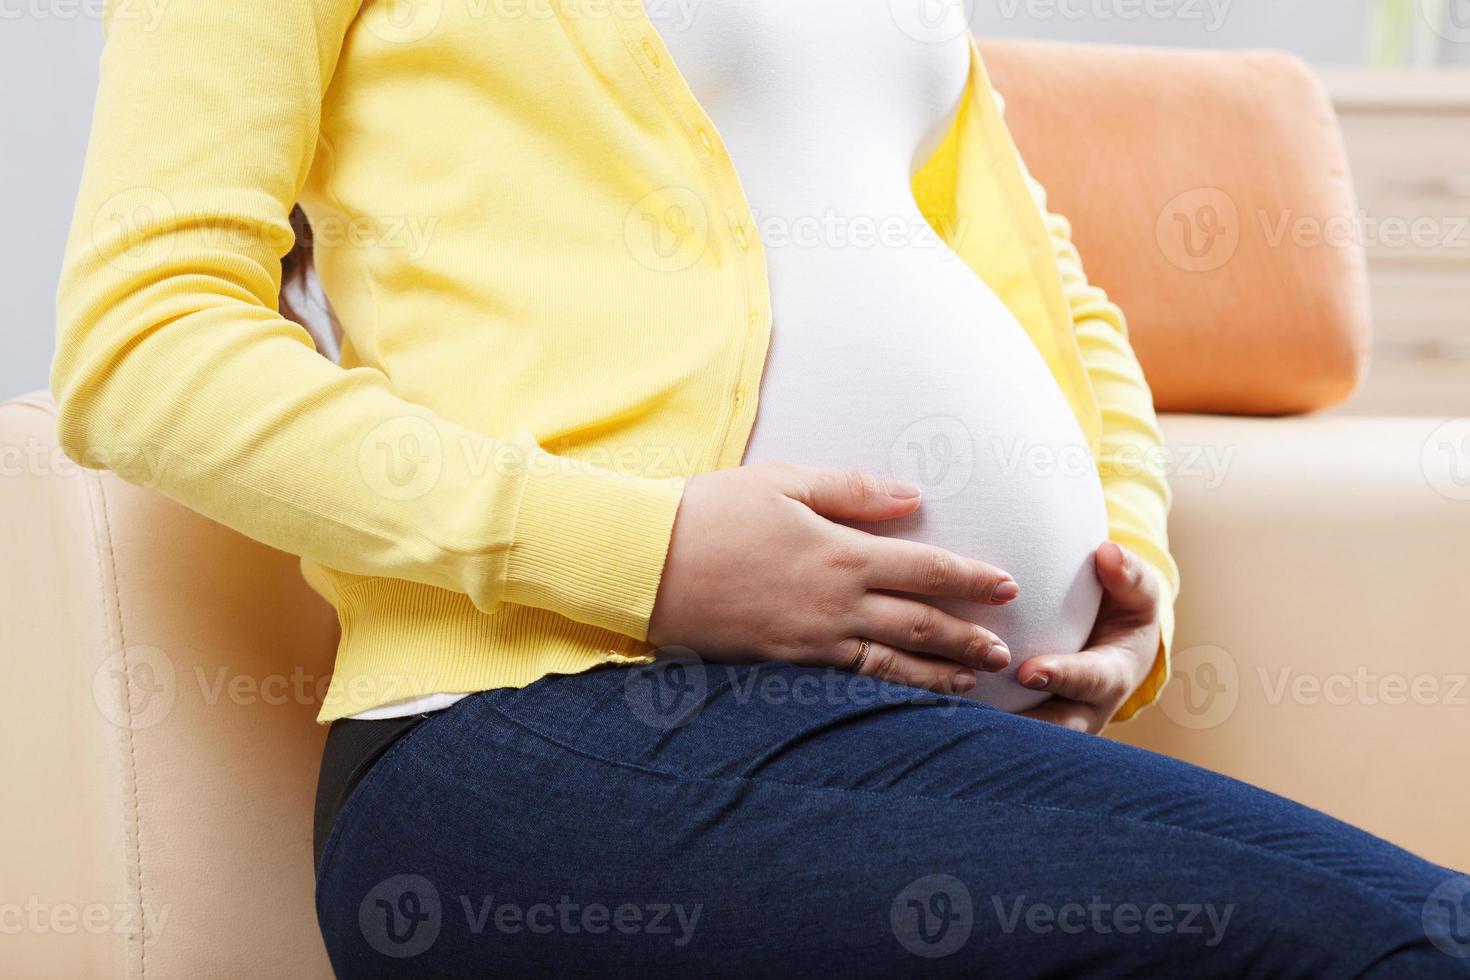 https://static.vecteezy.com/ti/gratis-foton/p1/994238-gravid-kvinna-hallande-hon-baby-bump-fotona.jpg